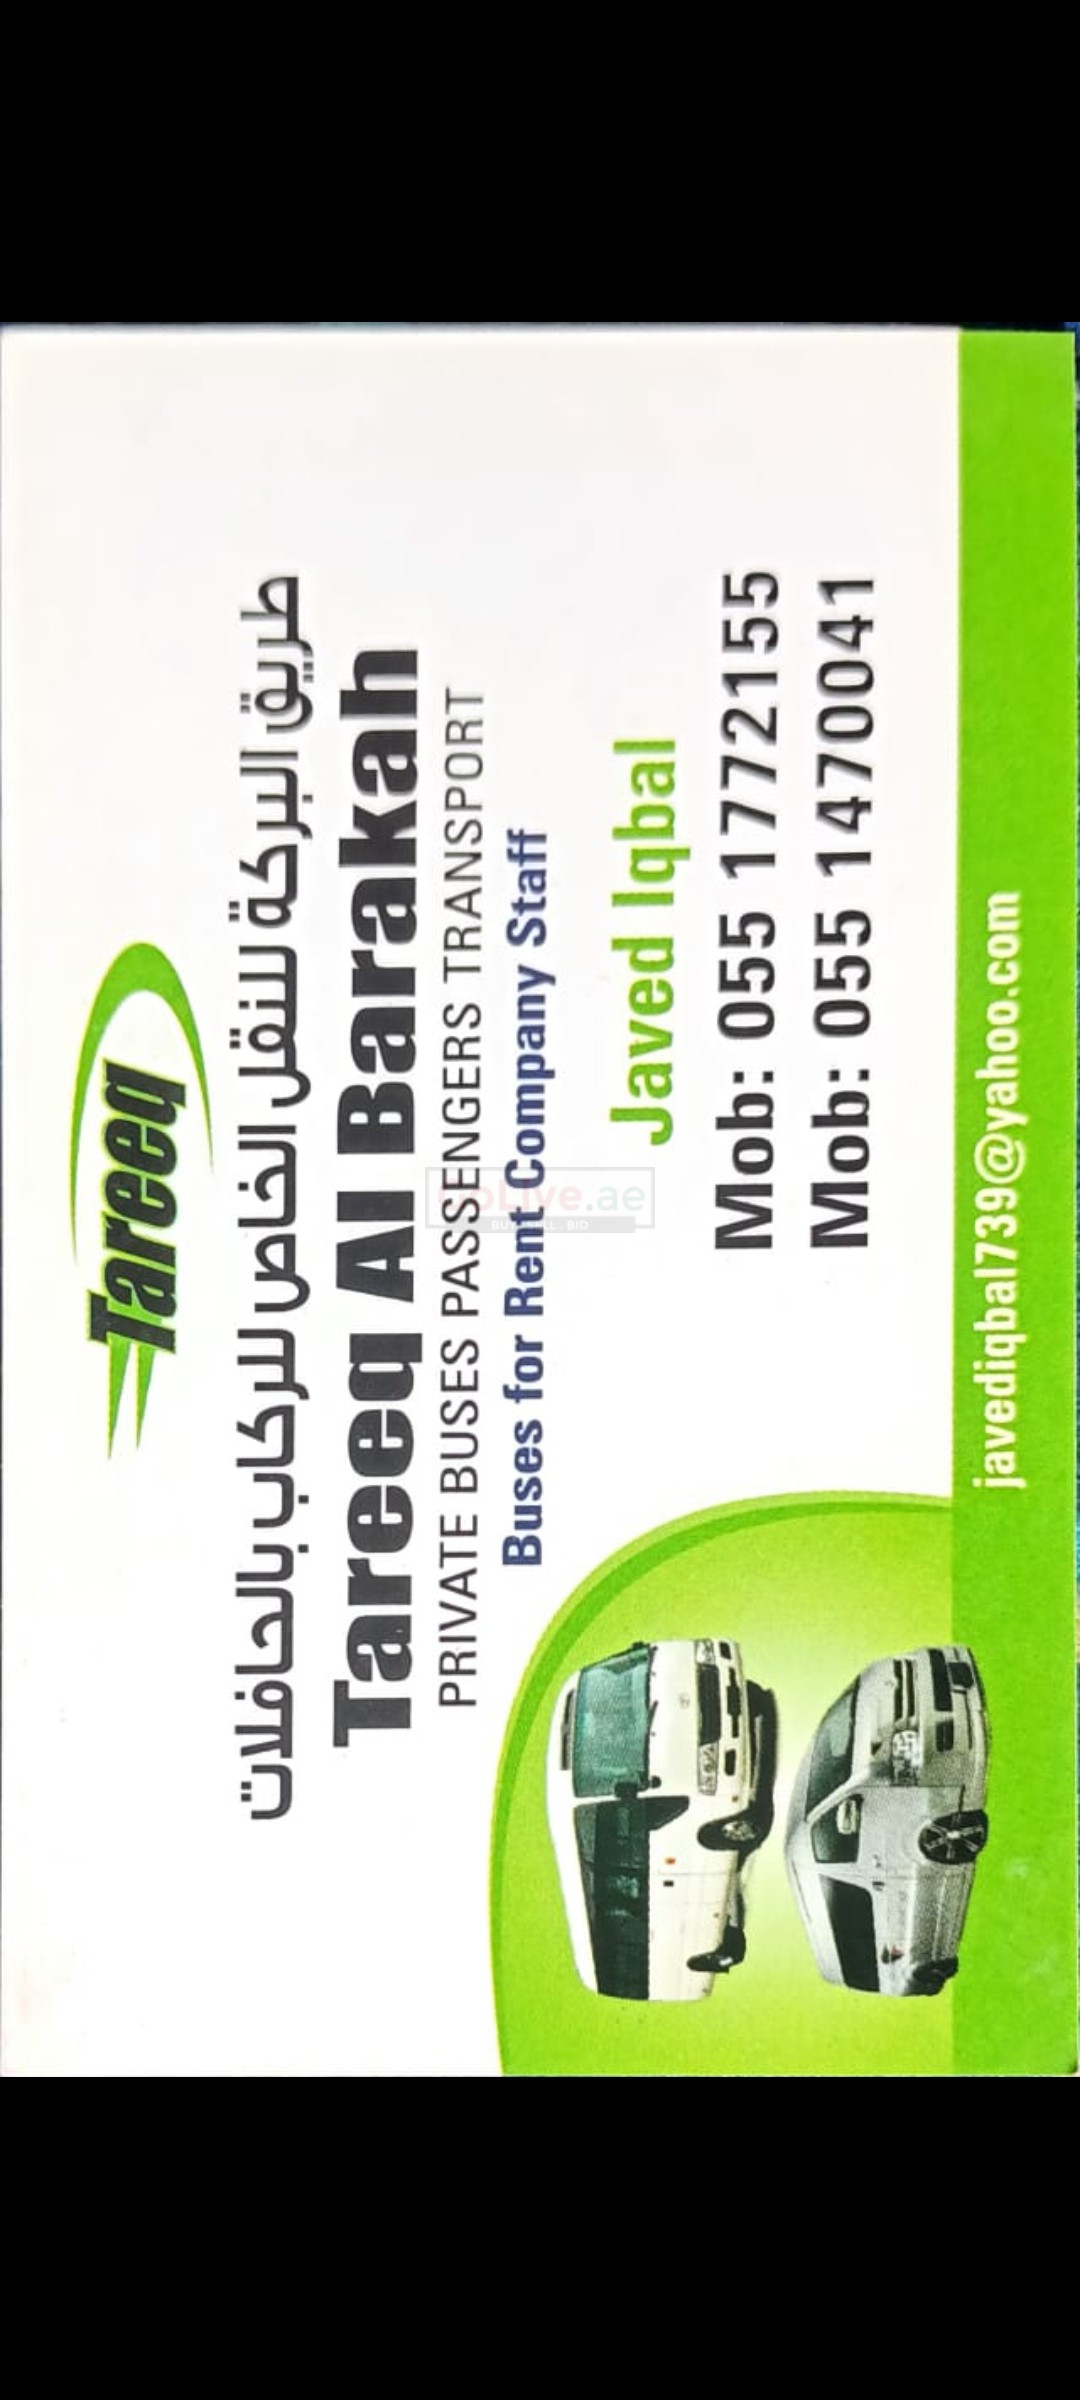 Car Lift sharjah to JLT internet cityAl Barsha Heights Knowledge Village